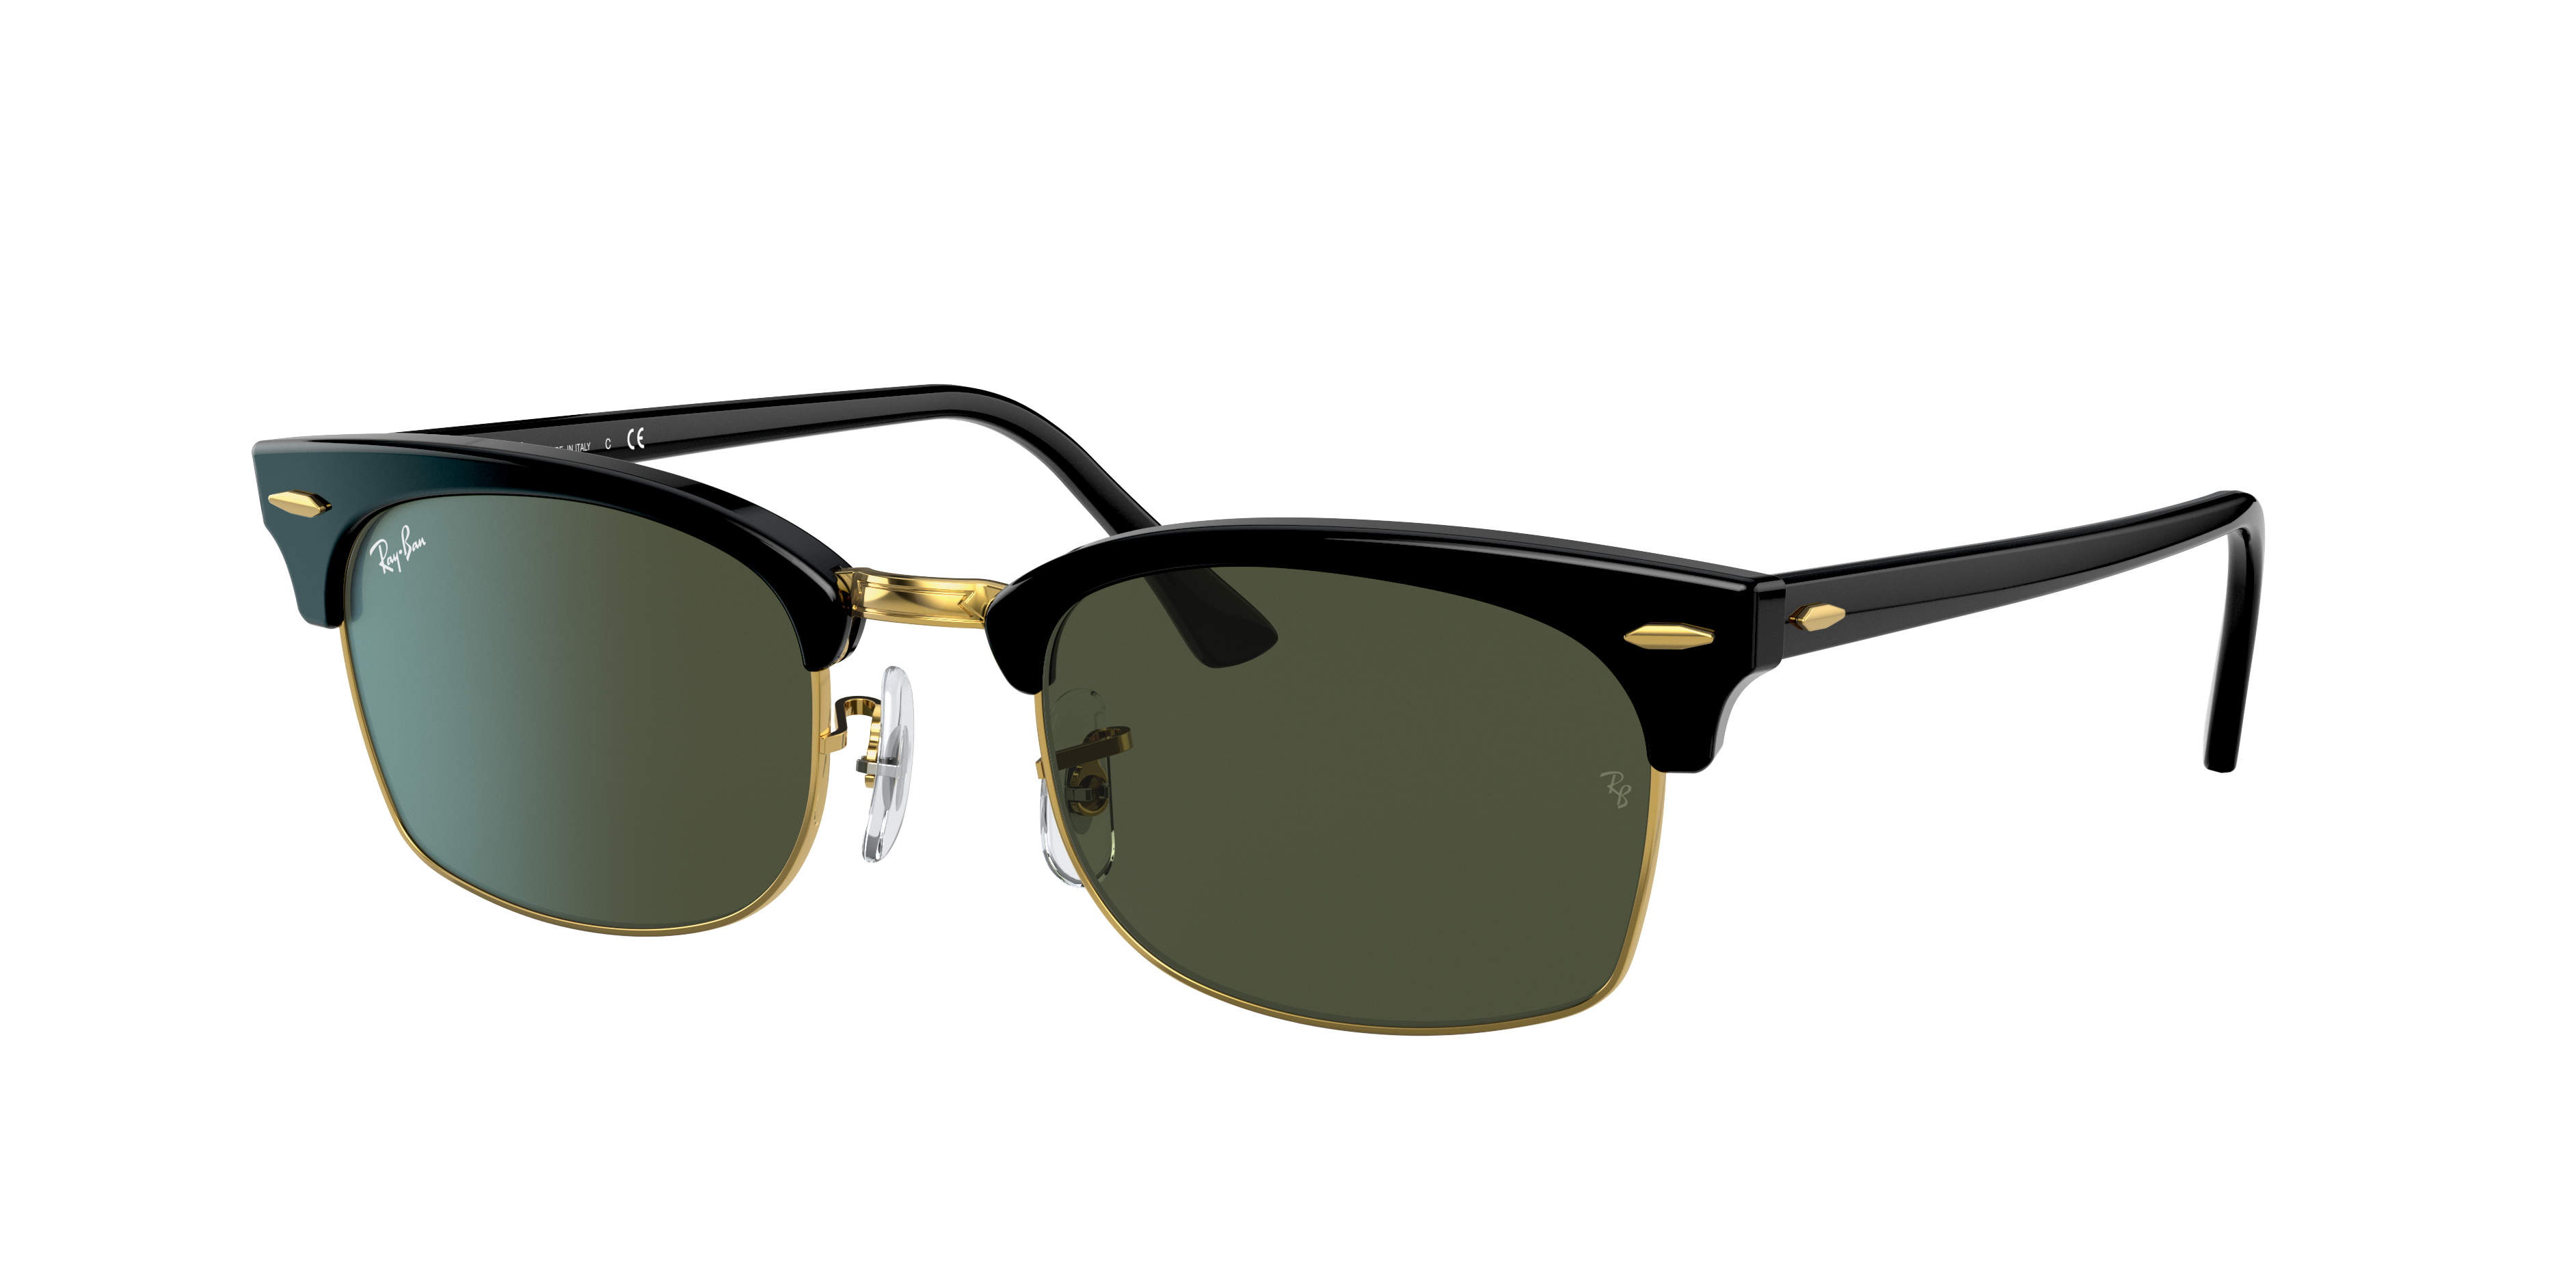 Ray Ban Clubmaster Square Legend Sunglasses Black Frame Green Lenses 55-21